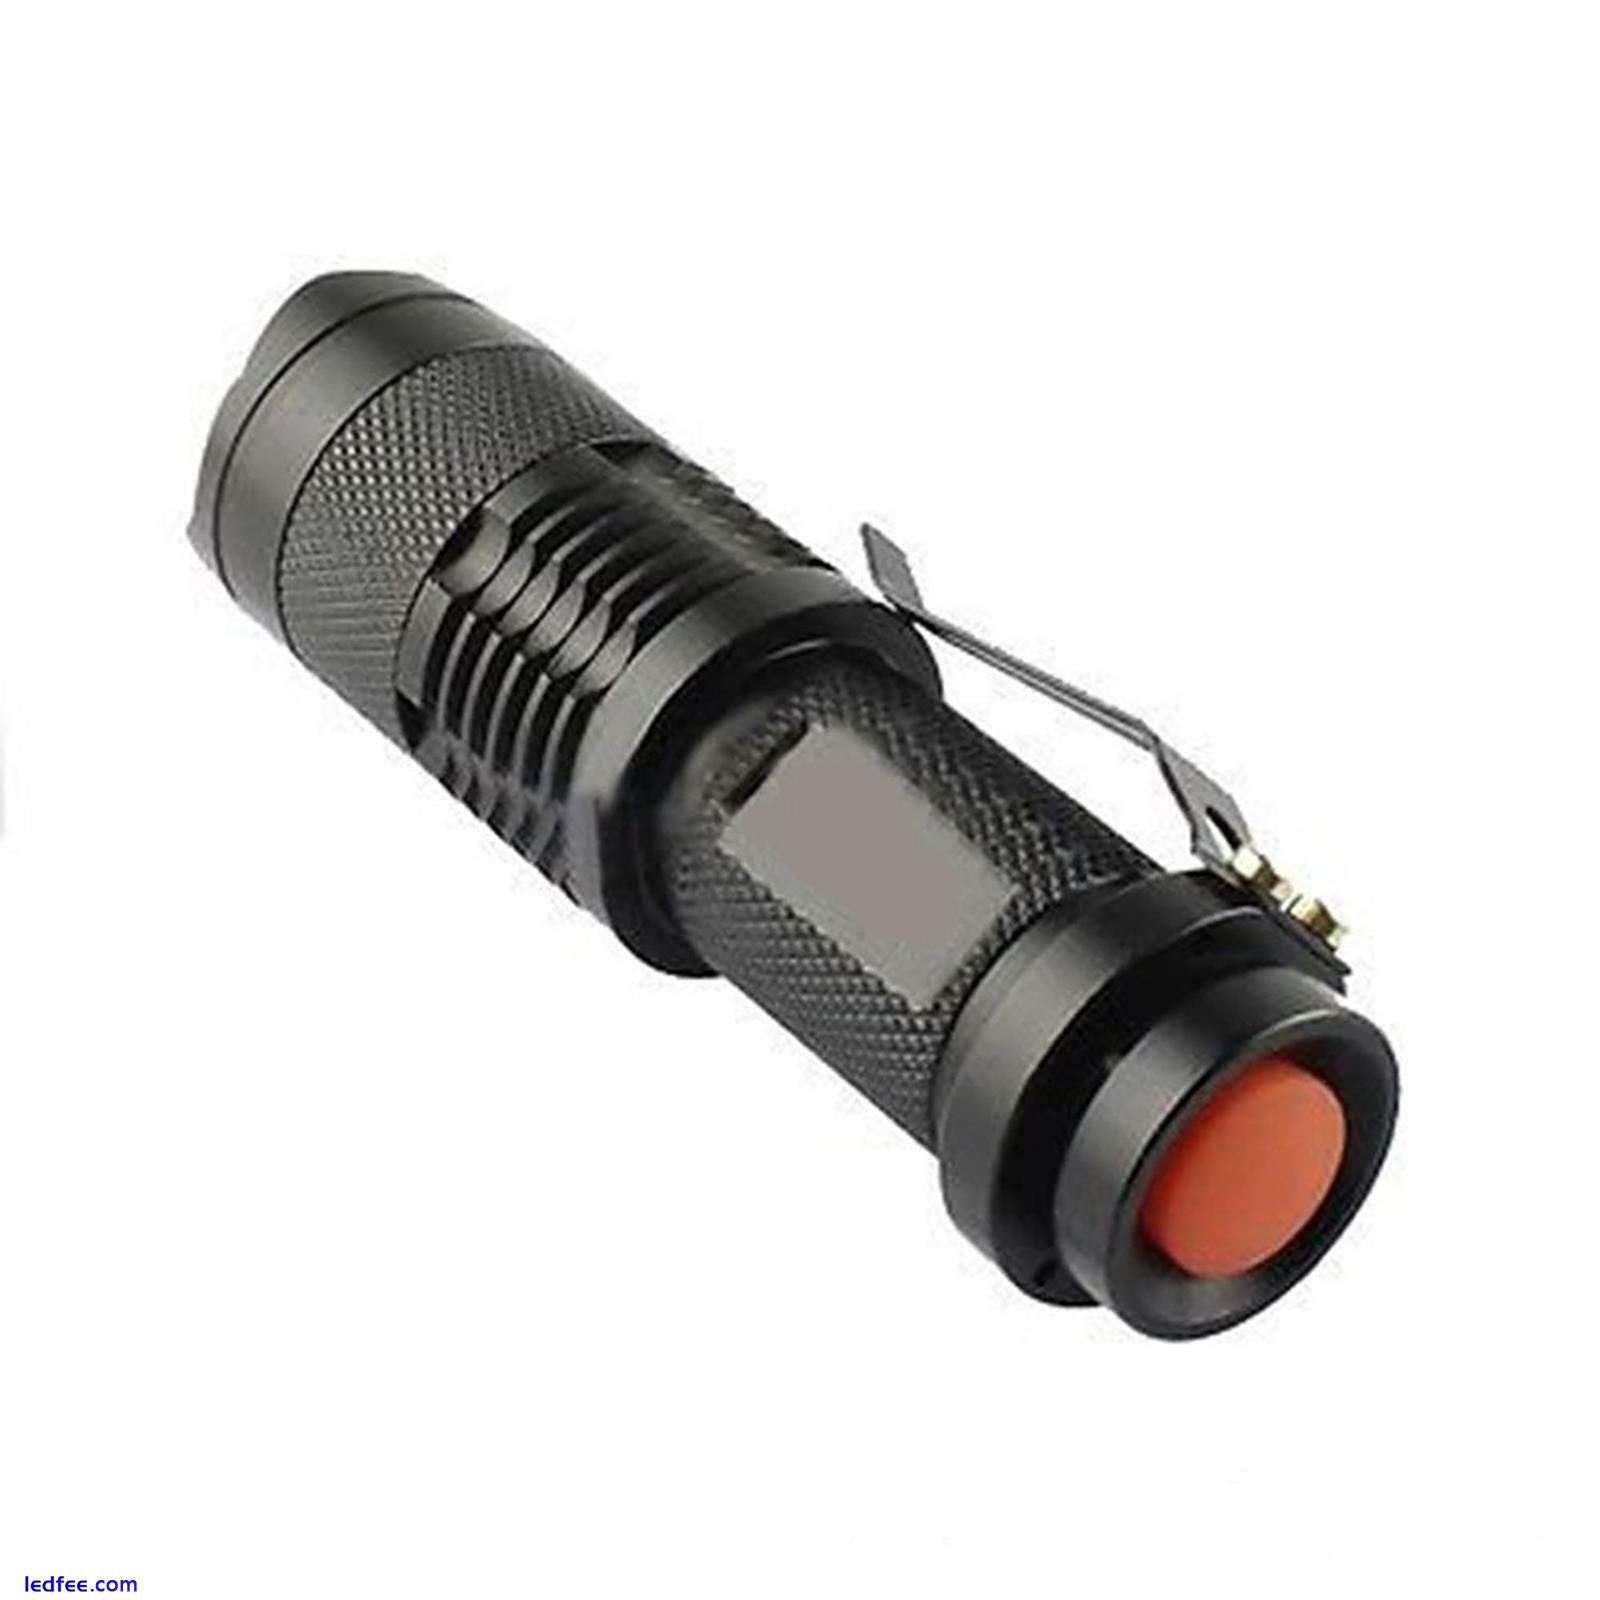 Small Tactical Torch Mini Handheld Powerful LED Pocket Flashlight Super Bright 1 